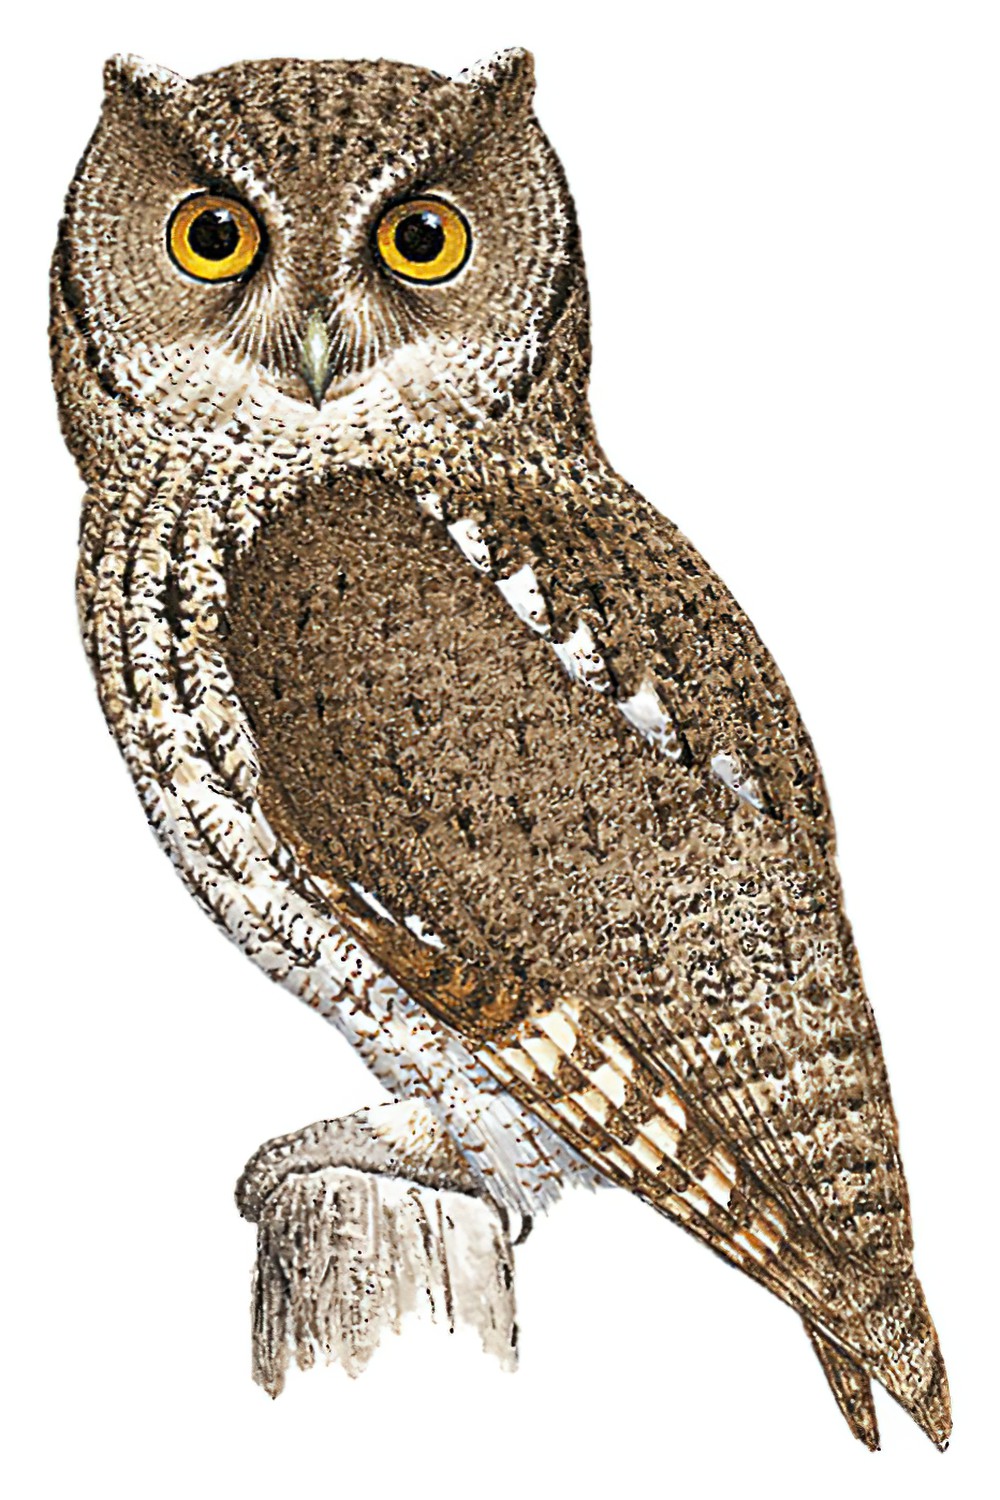 Montane Forest Screech-Owl / Megascops hoyi